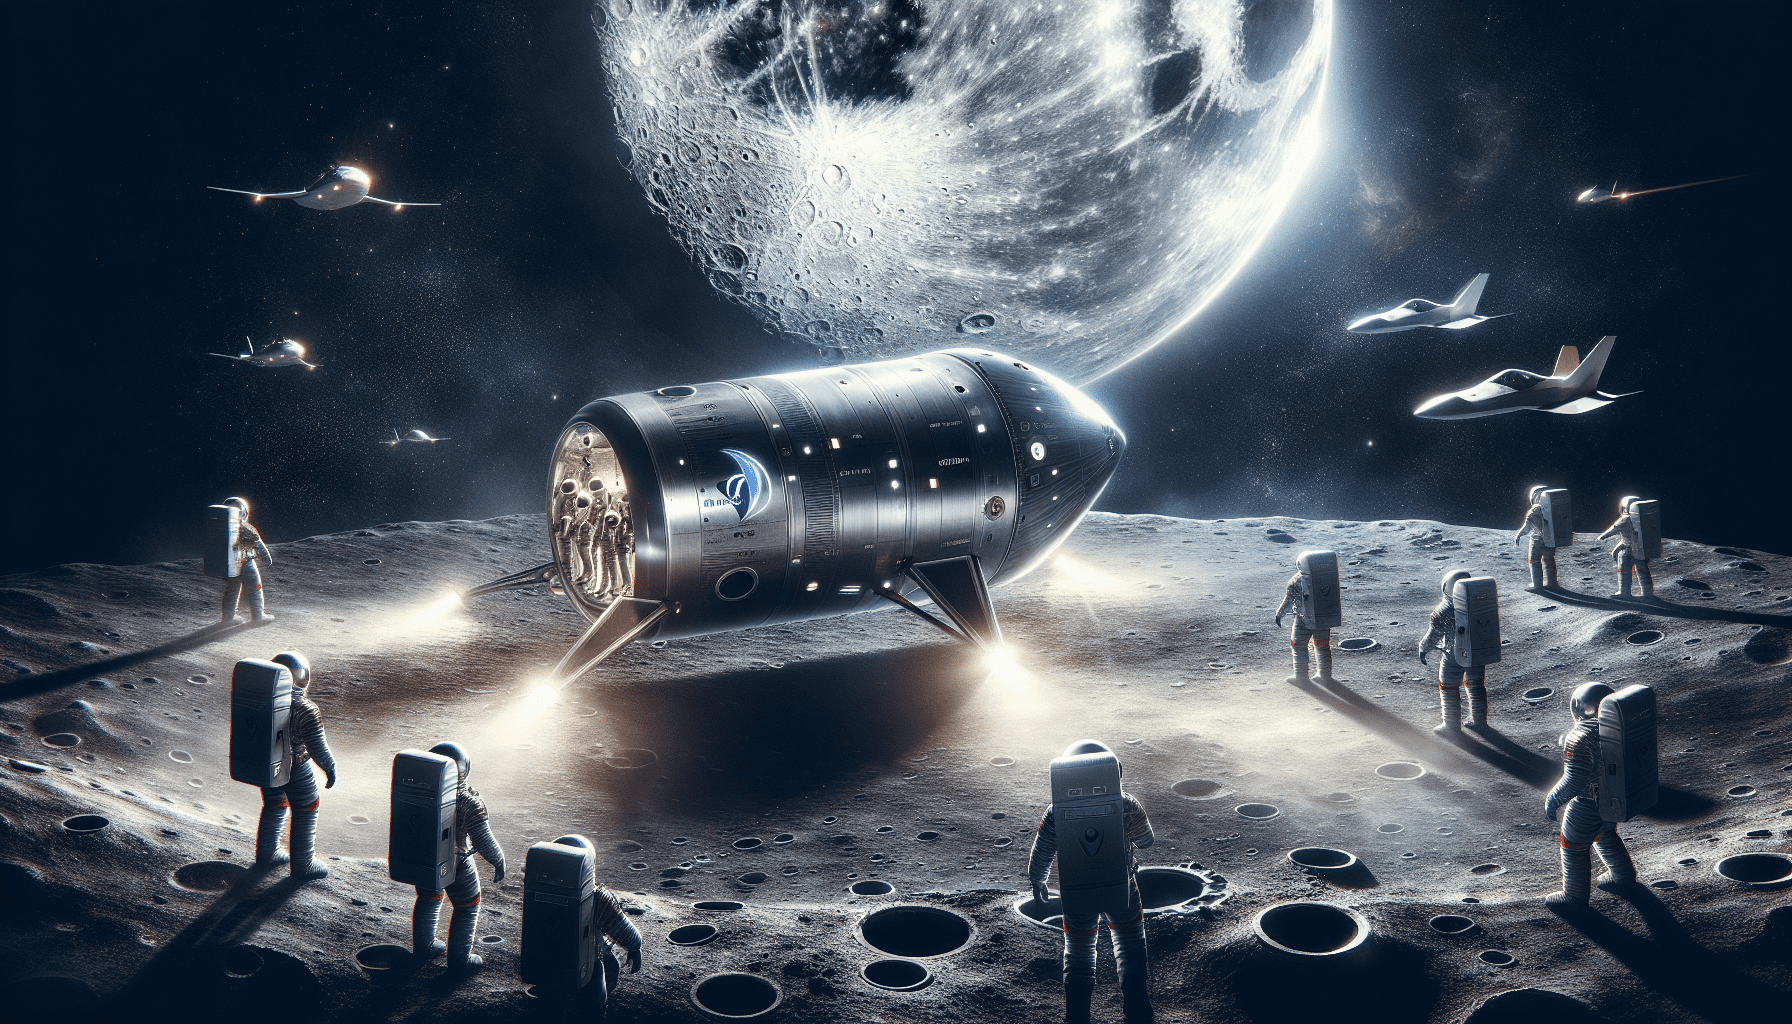 Artistic representation of a lunar exploration mission